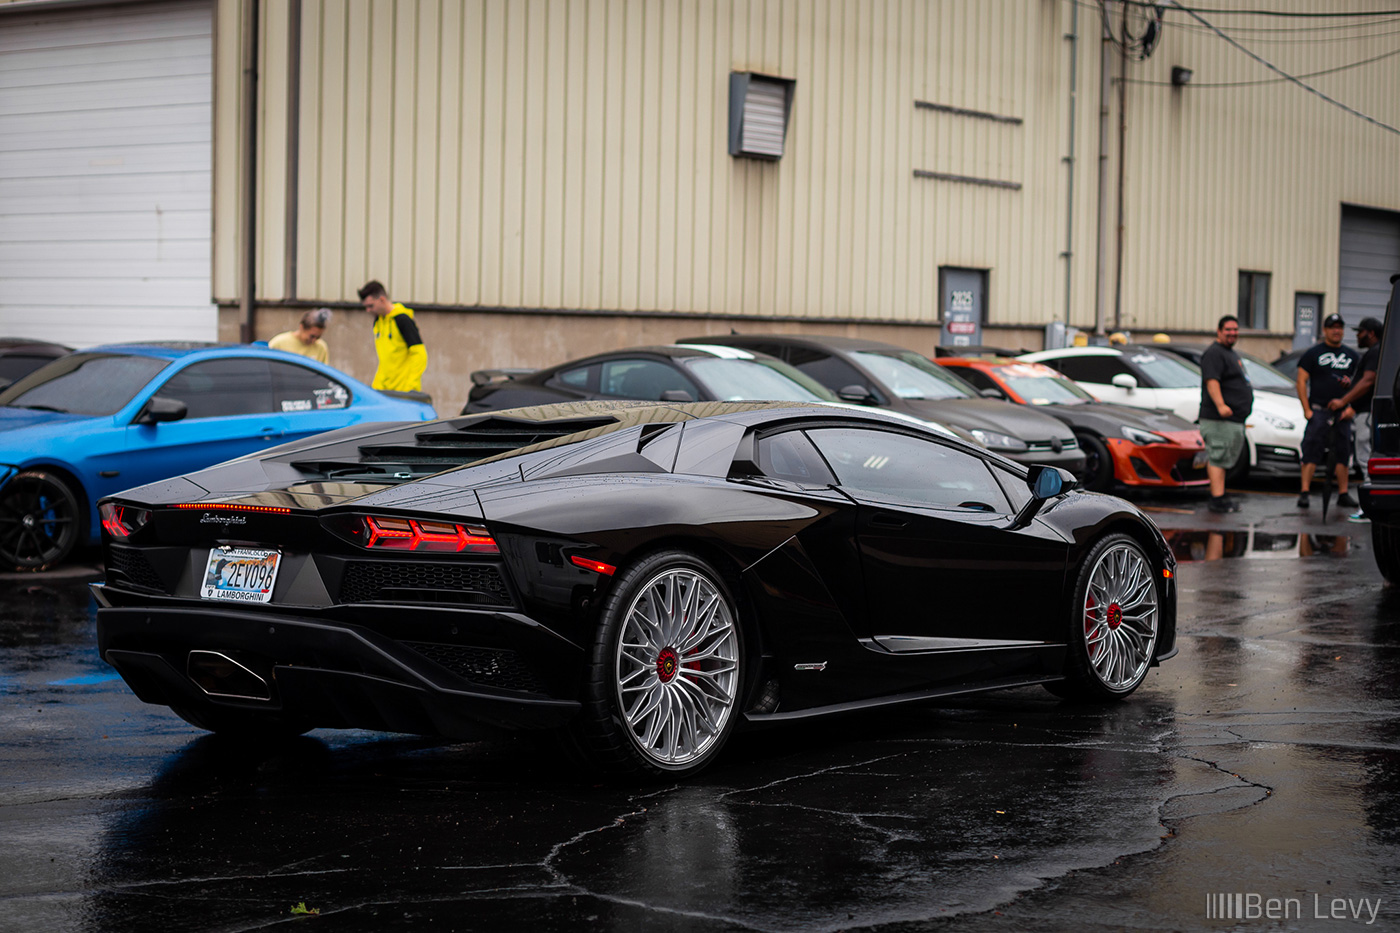 Black Lamborghini Aventador S out on a rainy day